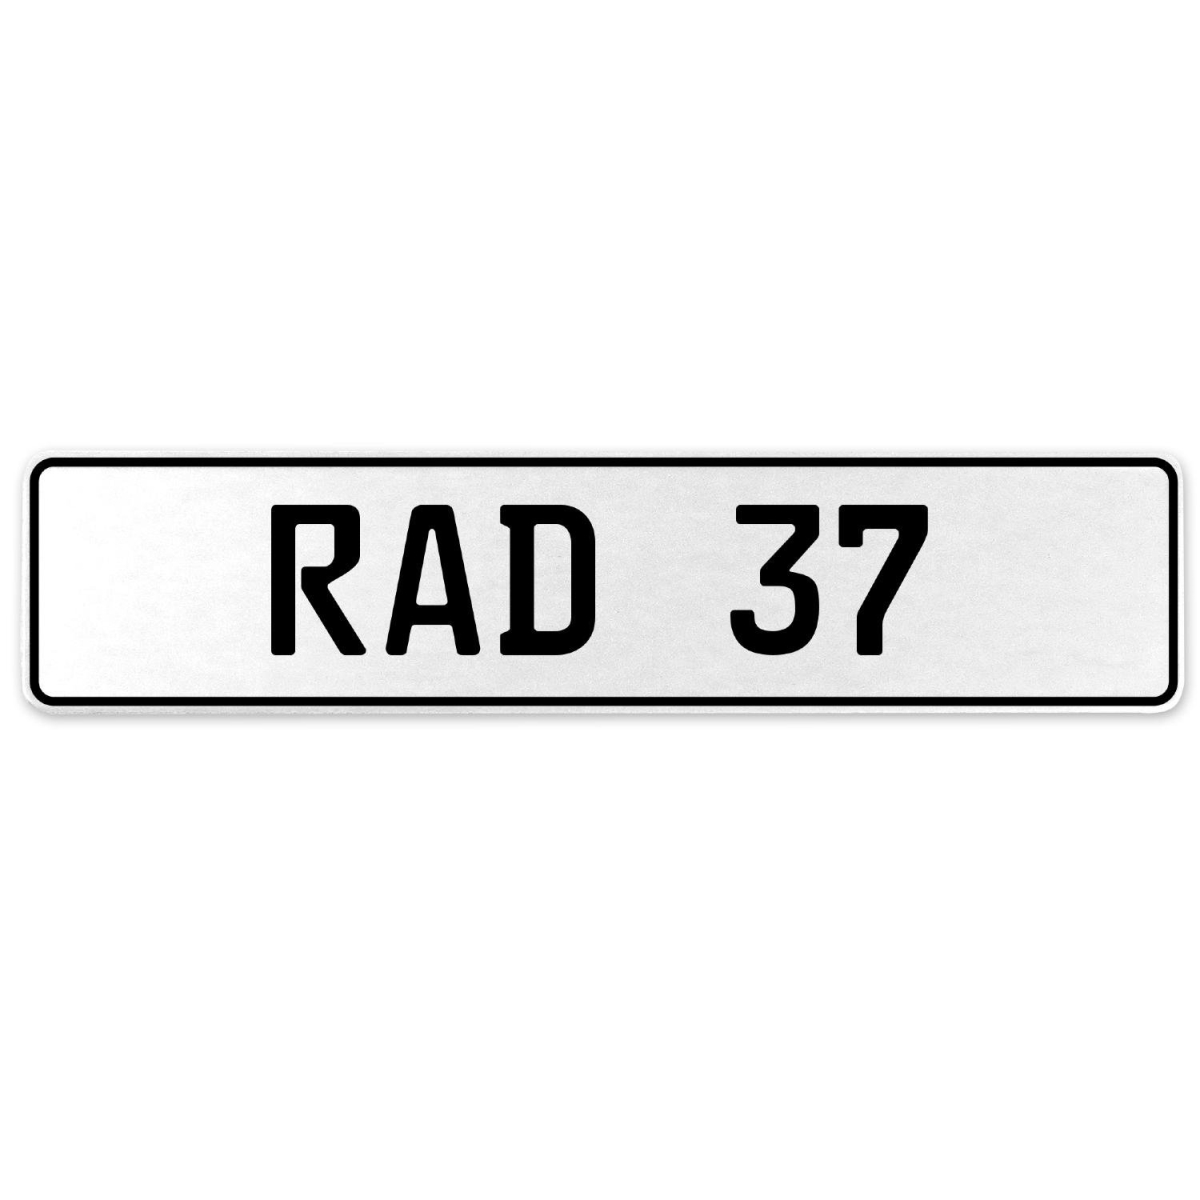 553941 Rad 37 - White Aluminum Street Sign Mancave Euro Plate Name Door Sign Wall Art